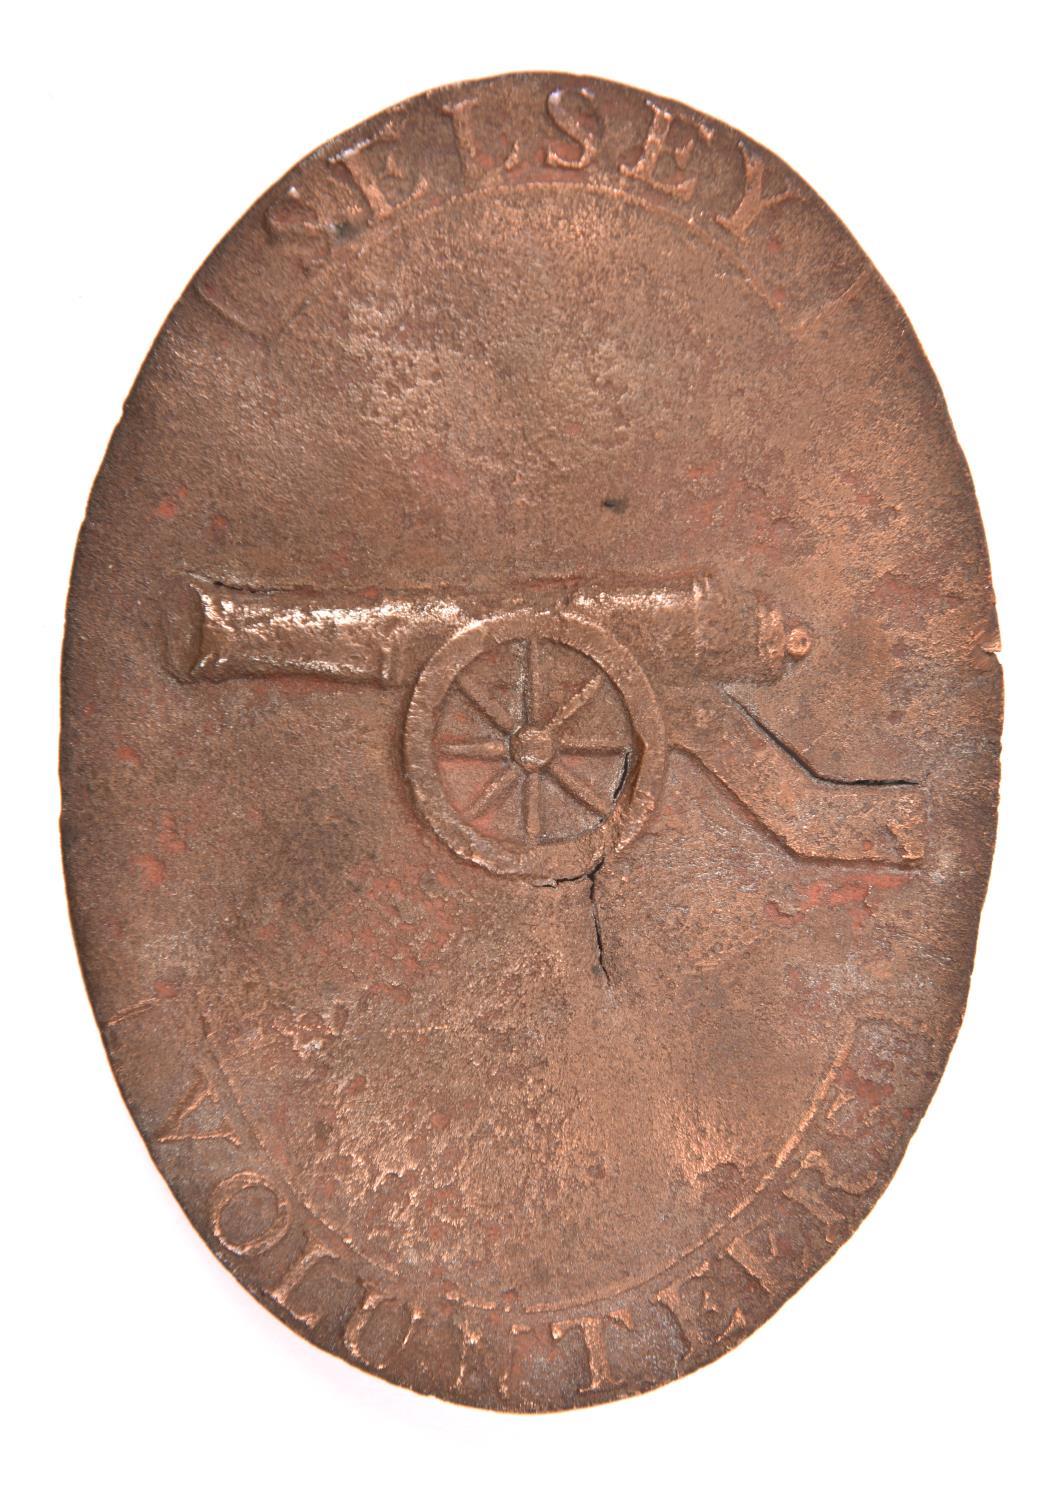 A rare die-struck oval brass shoulder belt plate of the Selsey Artillery Volunteers, c 1800, in